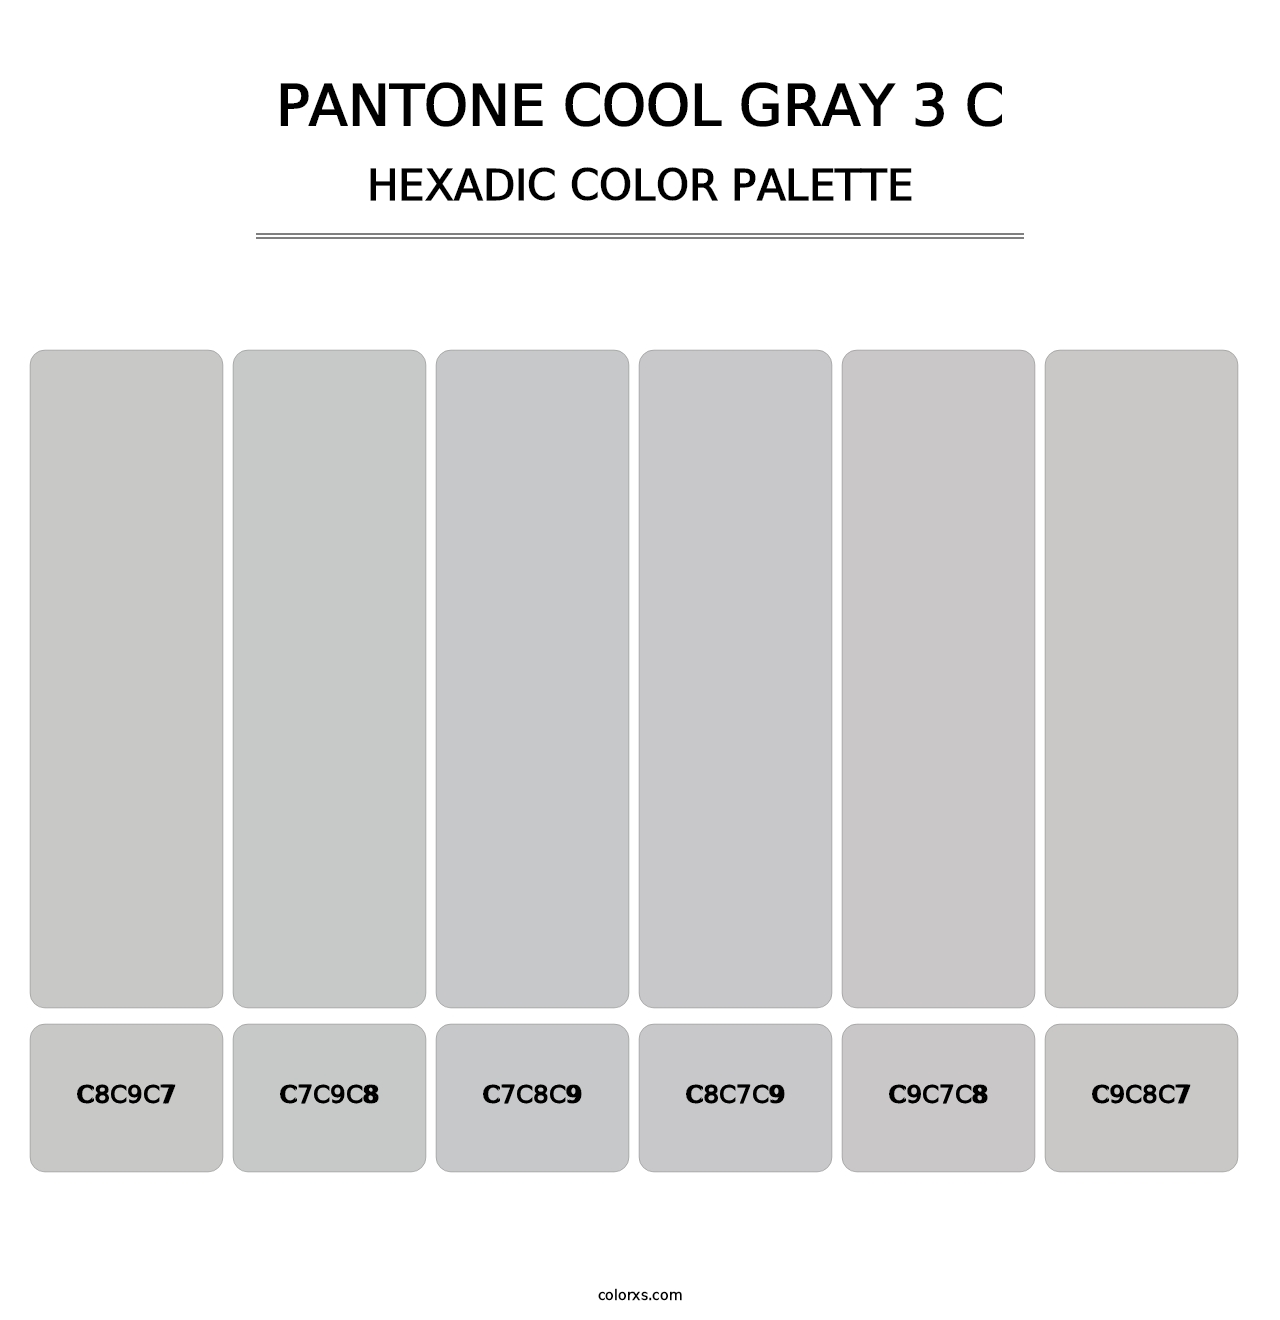 PANTONE Cool Gray 3 C - Hexadic Color Palette